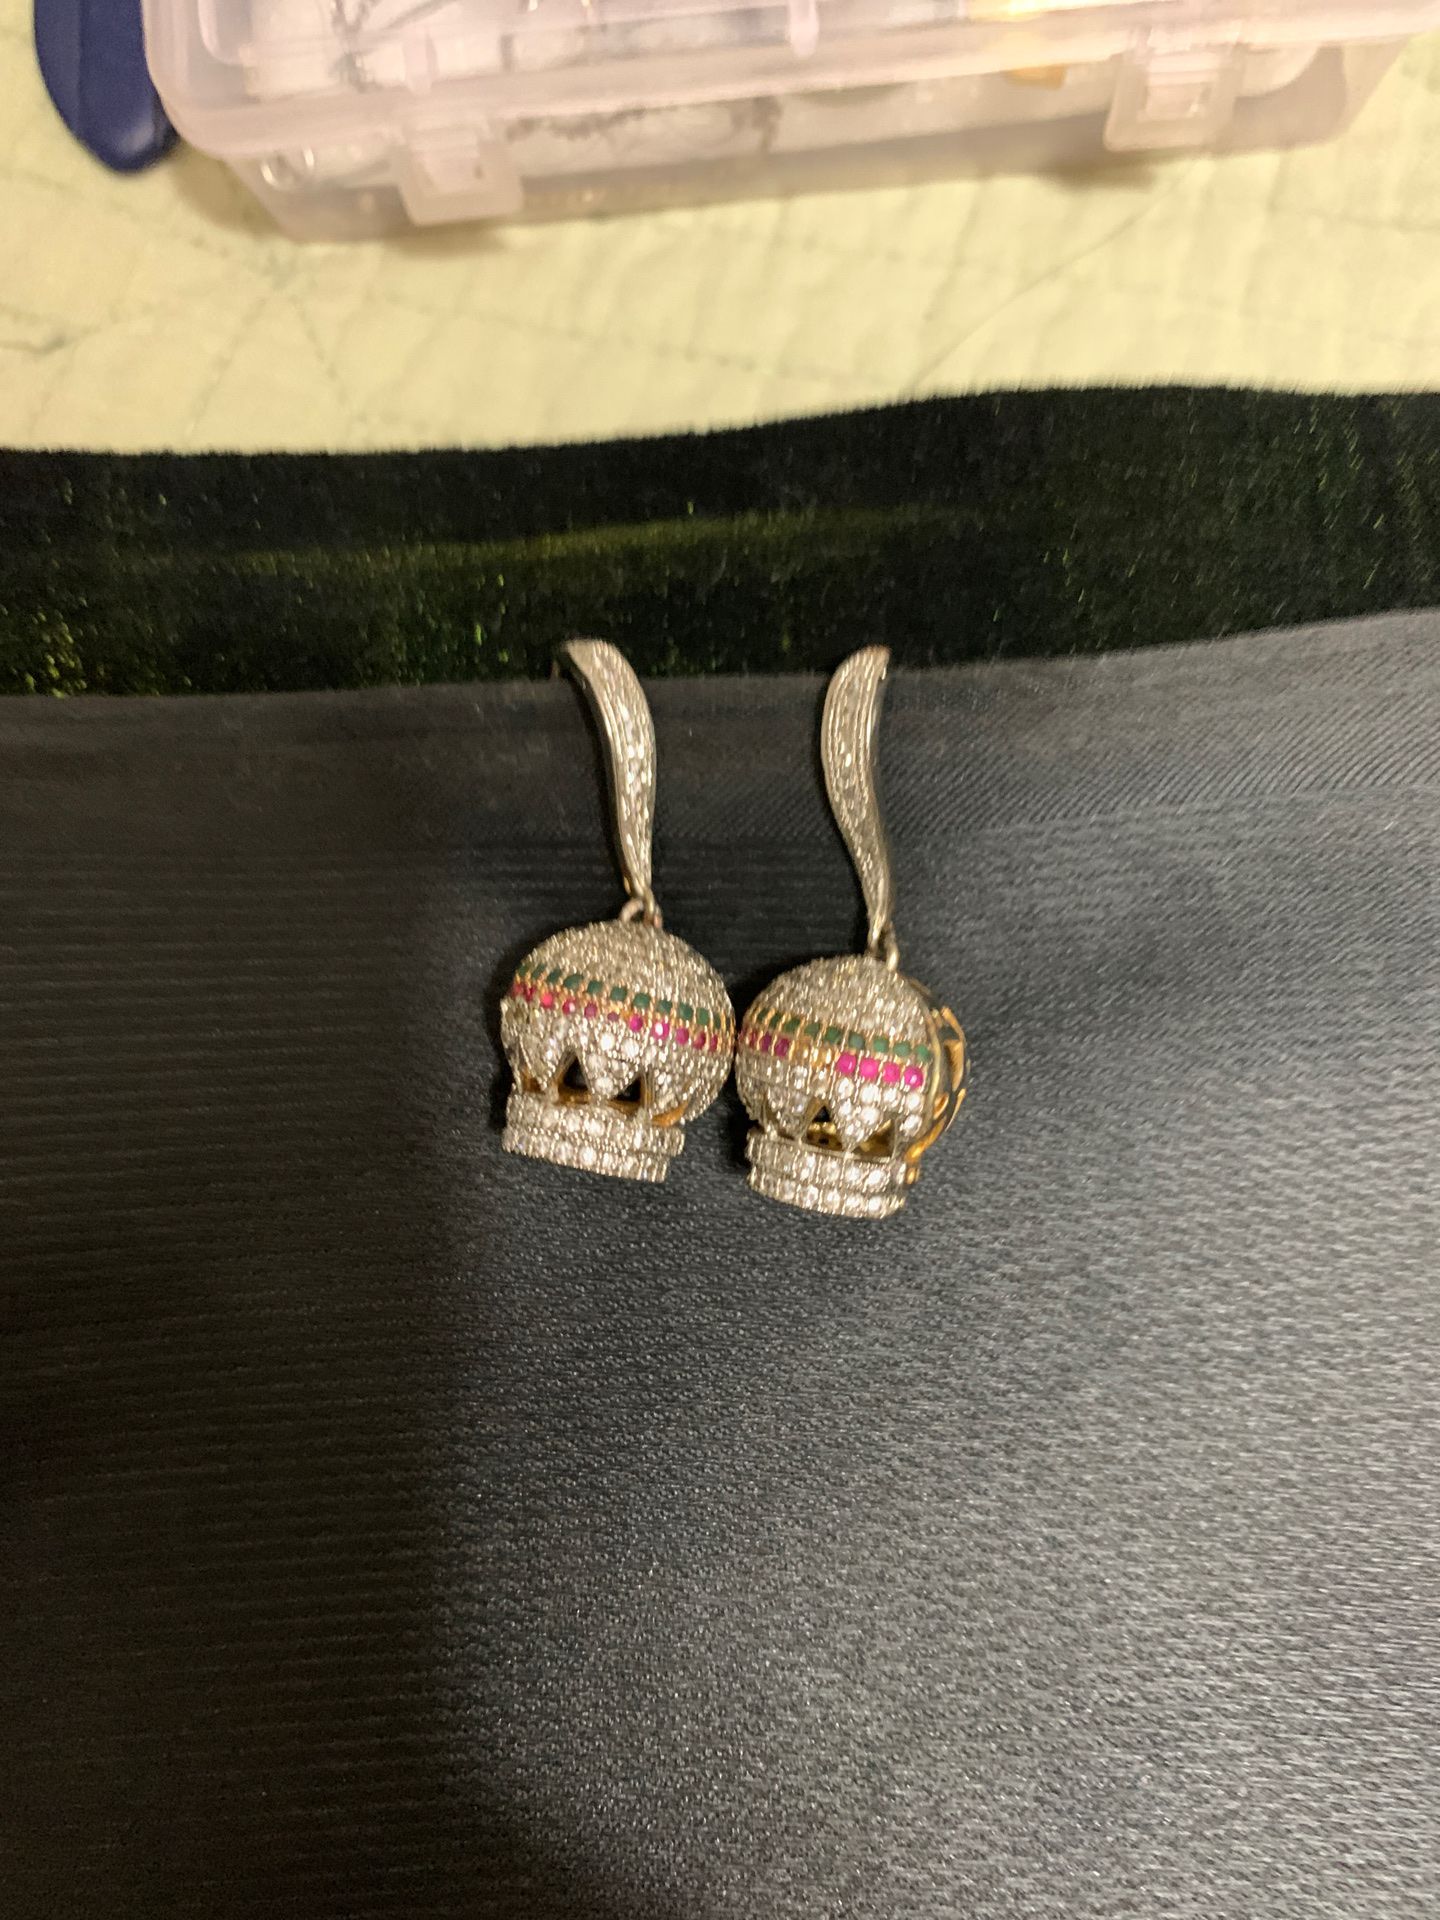 Nice diamond earrings